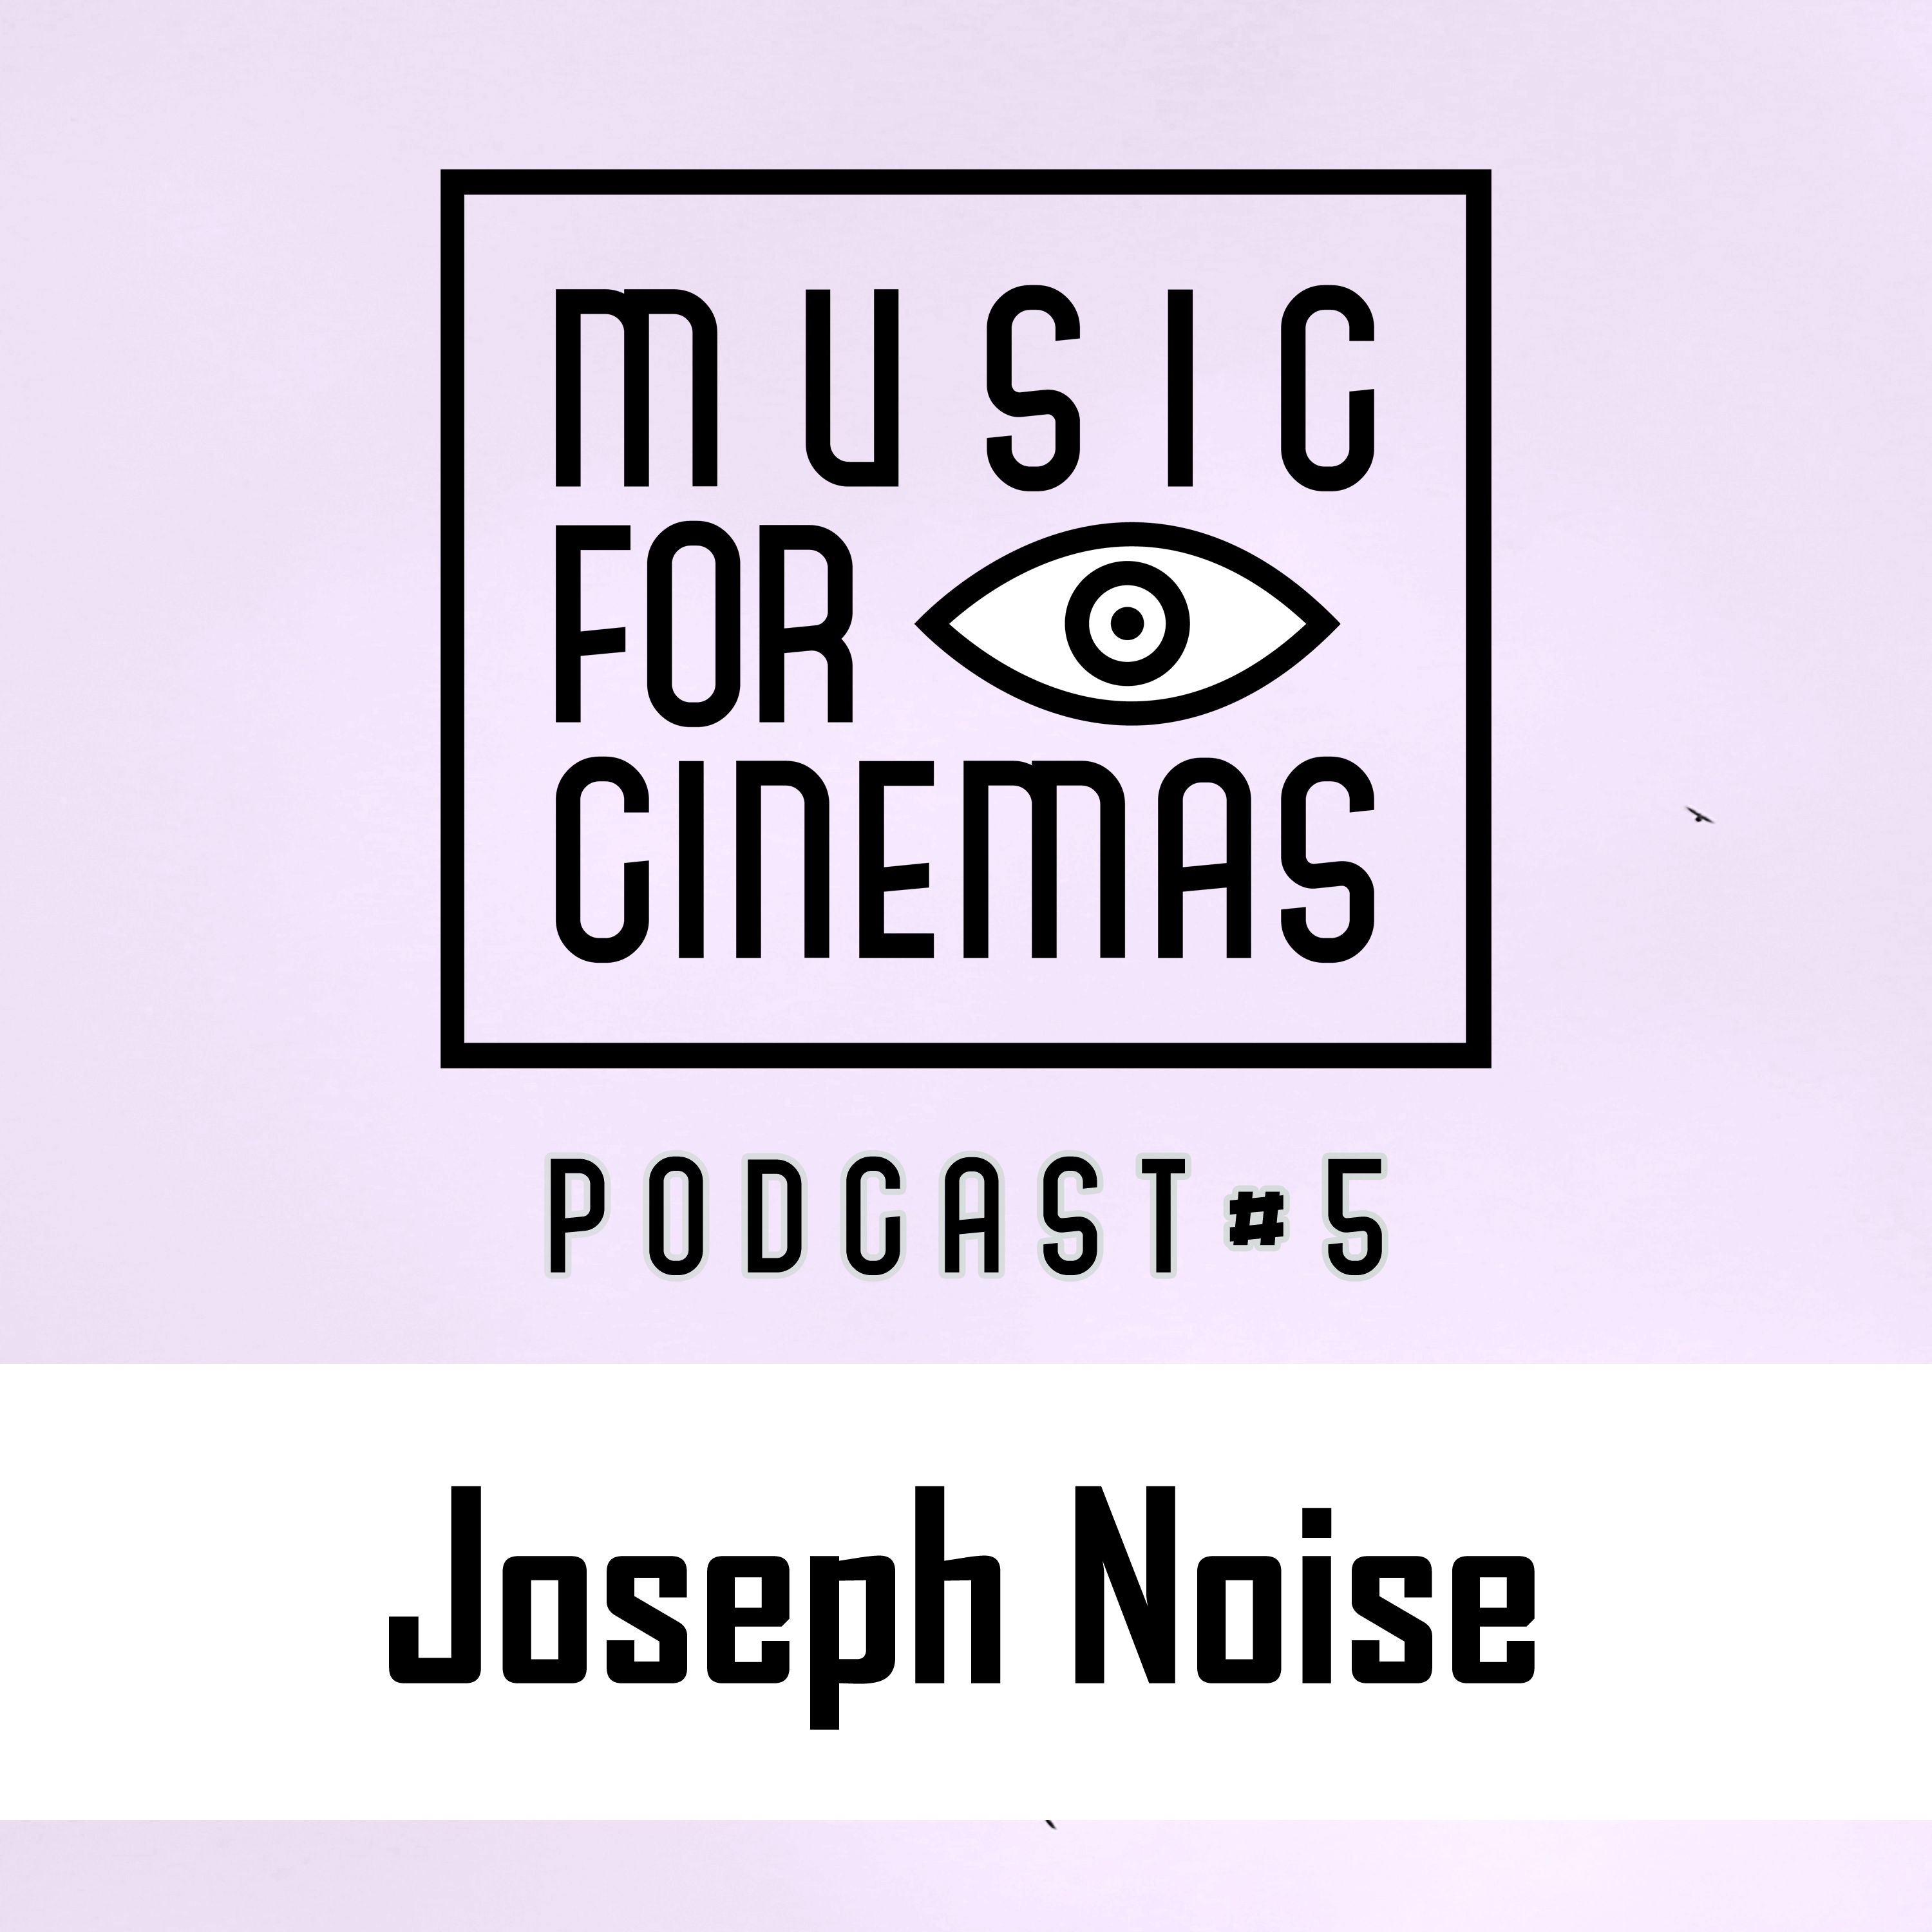 Joseph Noise